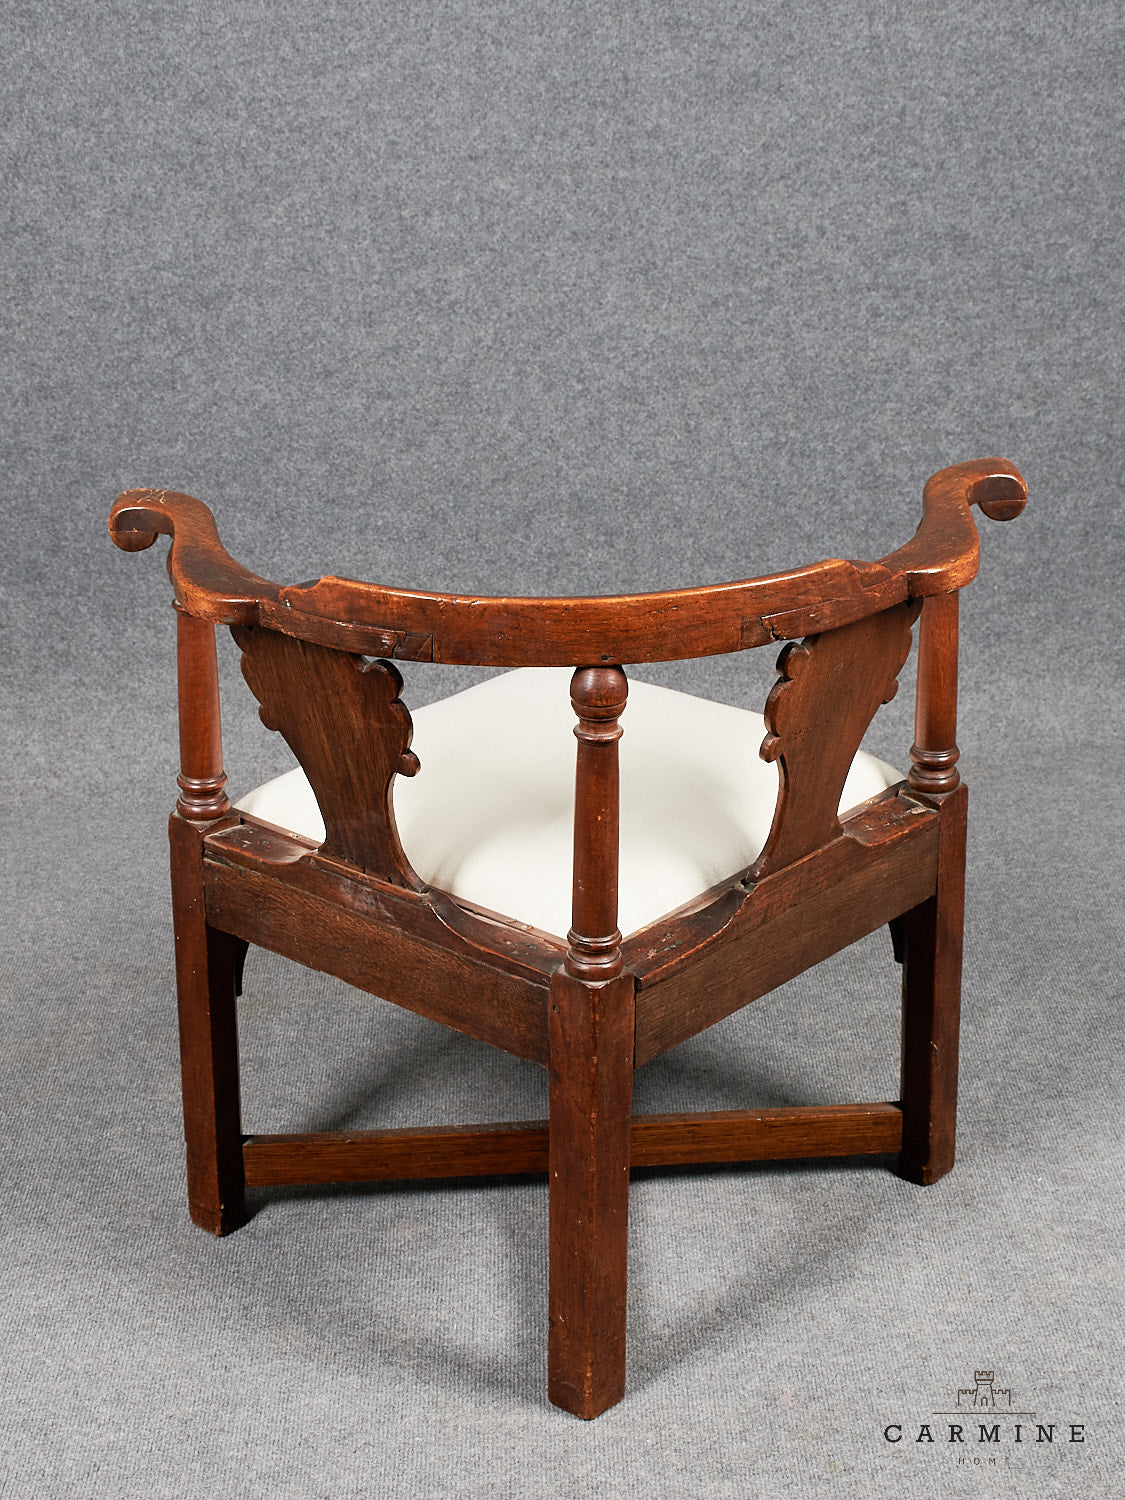 Chaise d'angle (chaise d'écriture) vers 1750